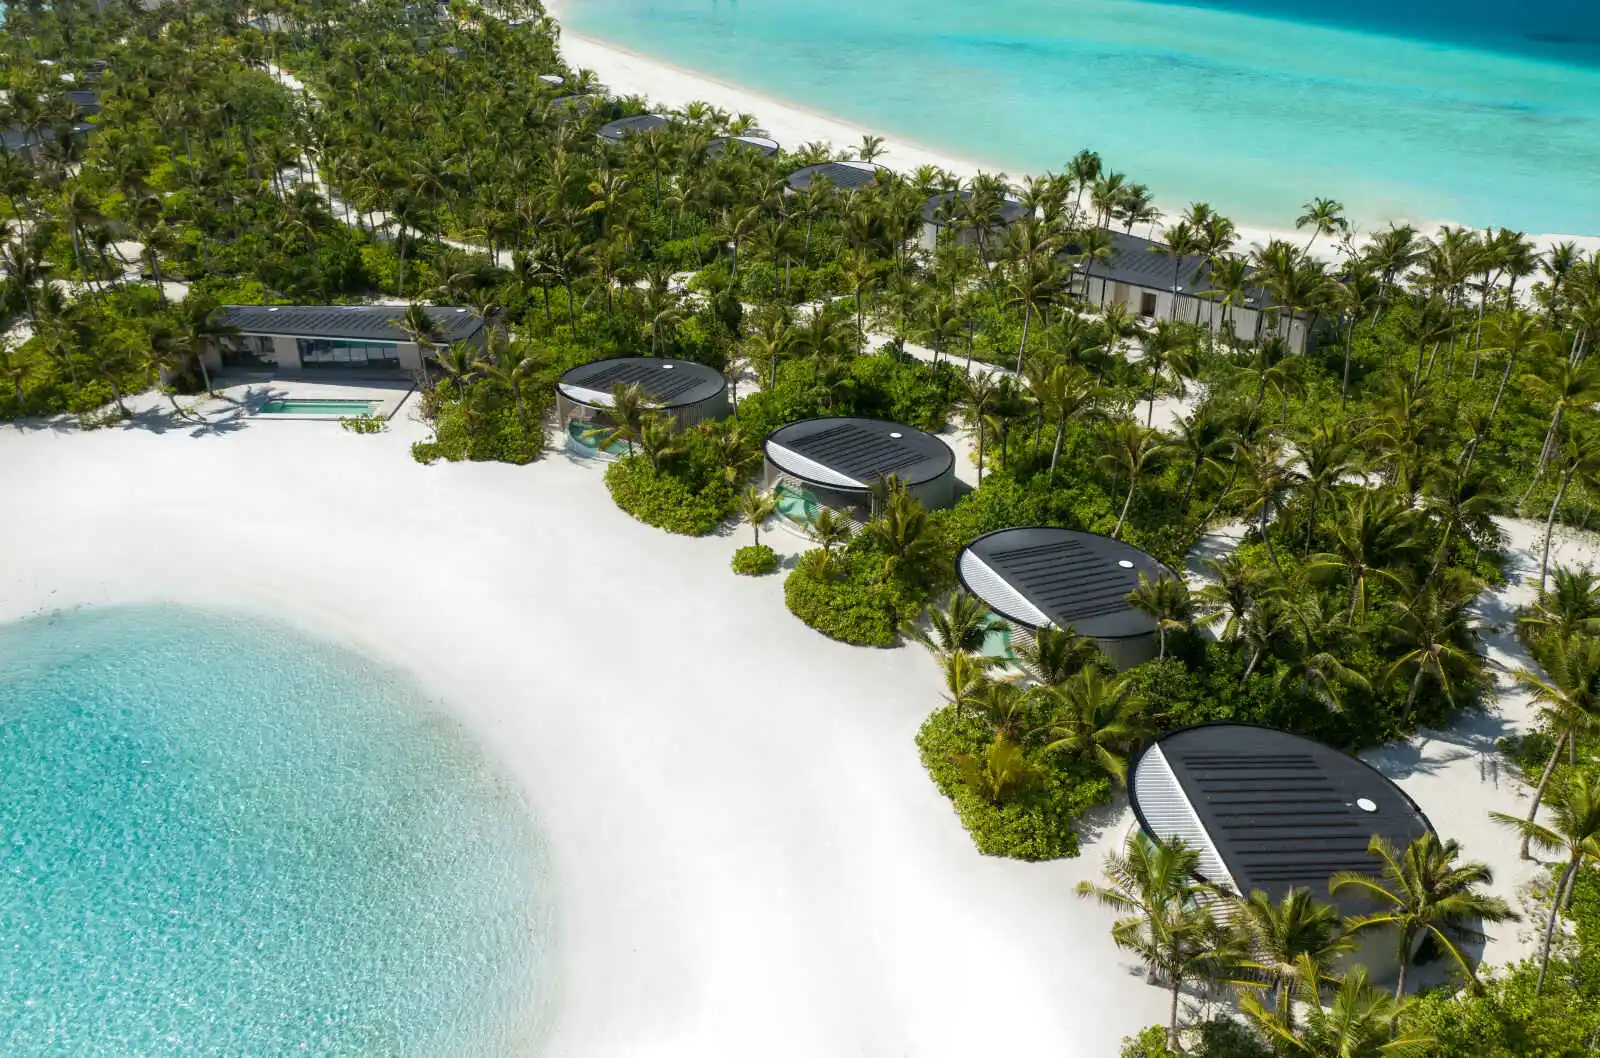 Vue sur la plage de l'hôtel, Ritz Carlton Maldives : Fari Islands